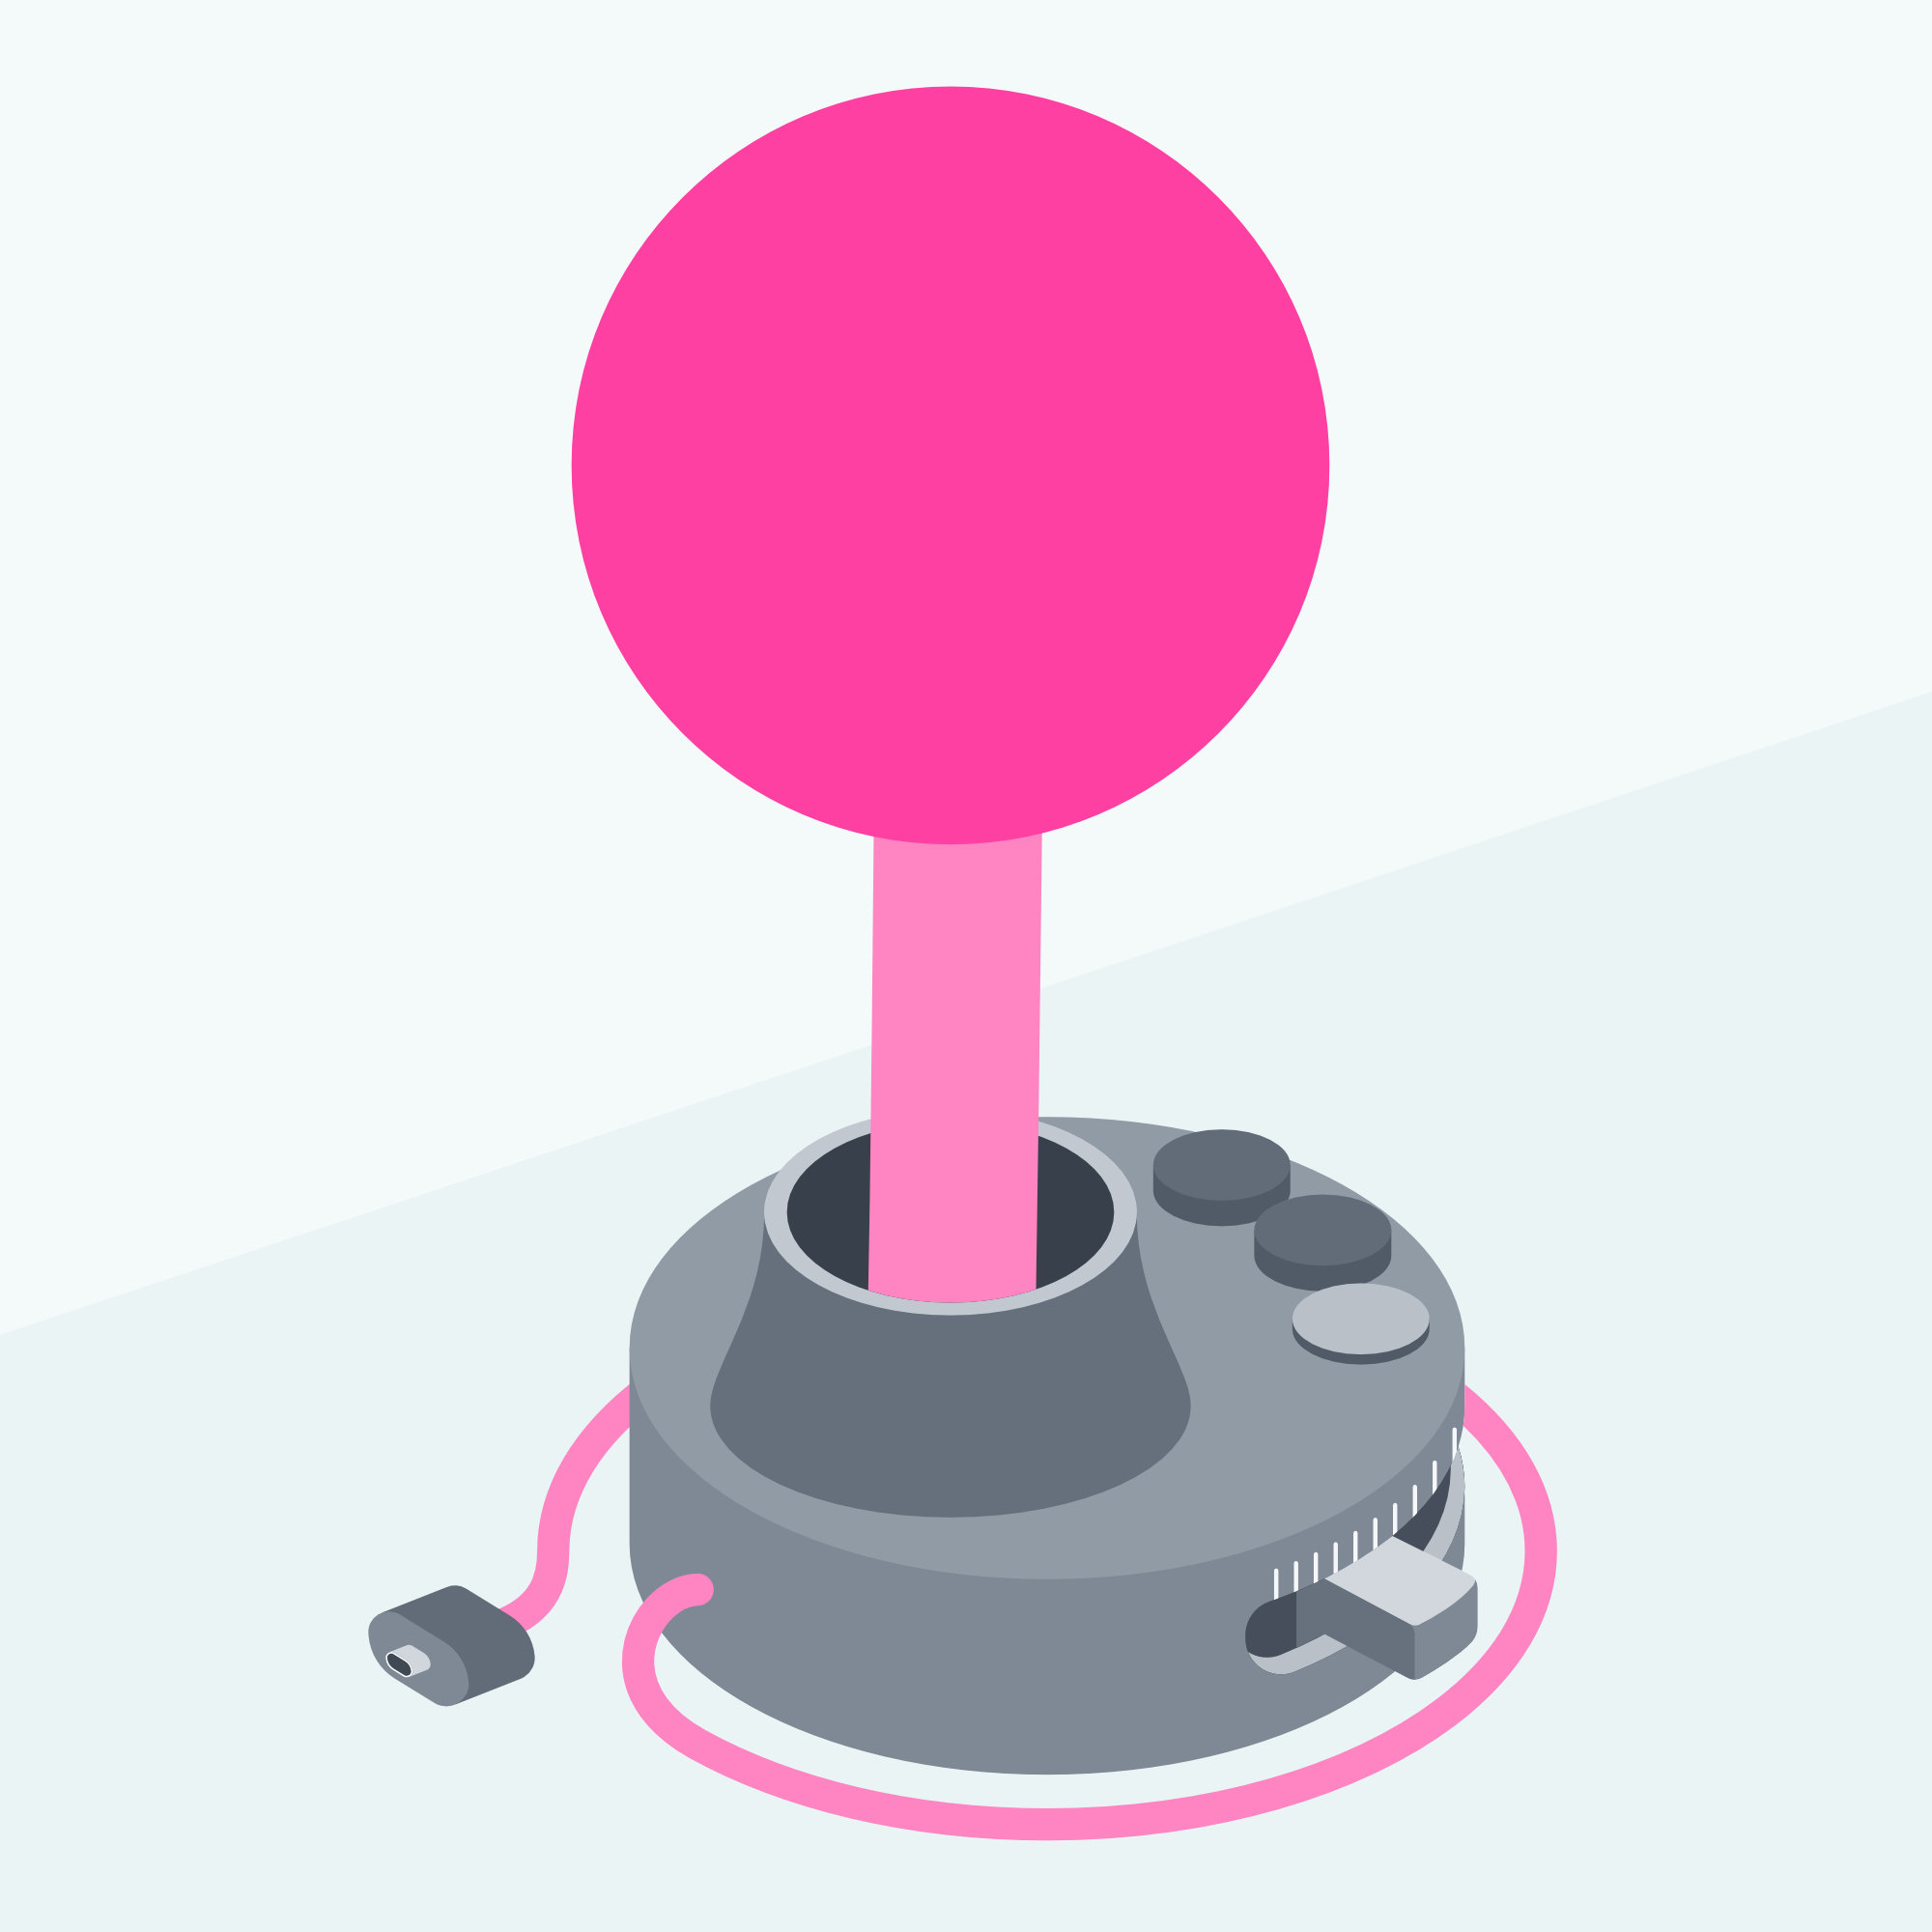 Illustration of a advanced joystick with plain colors